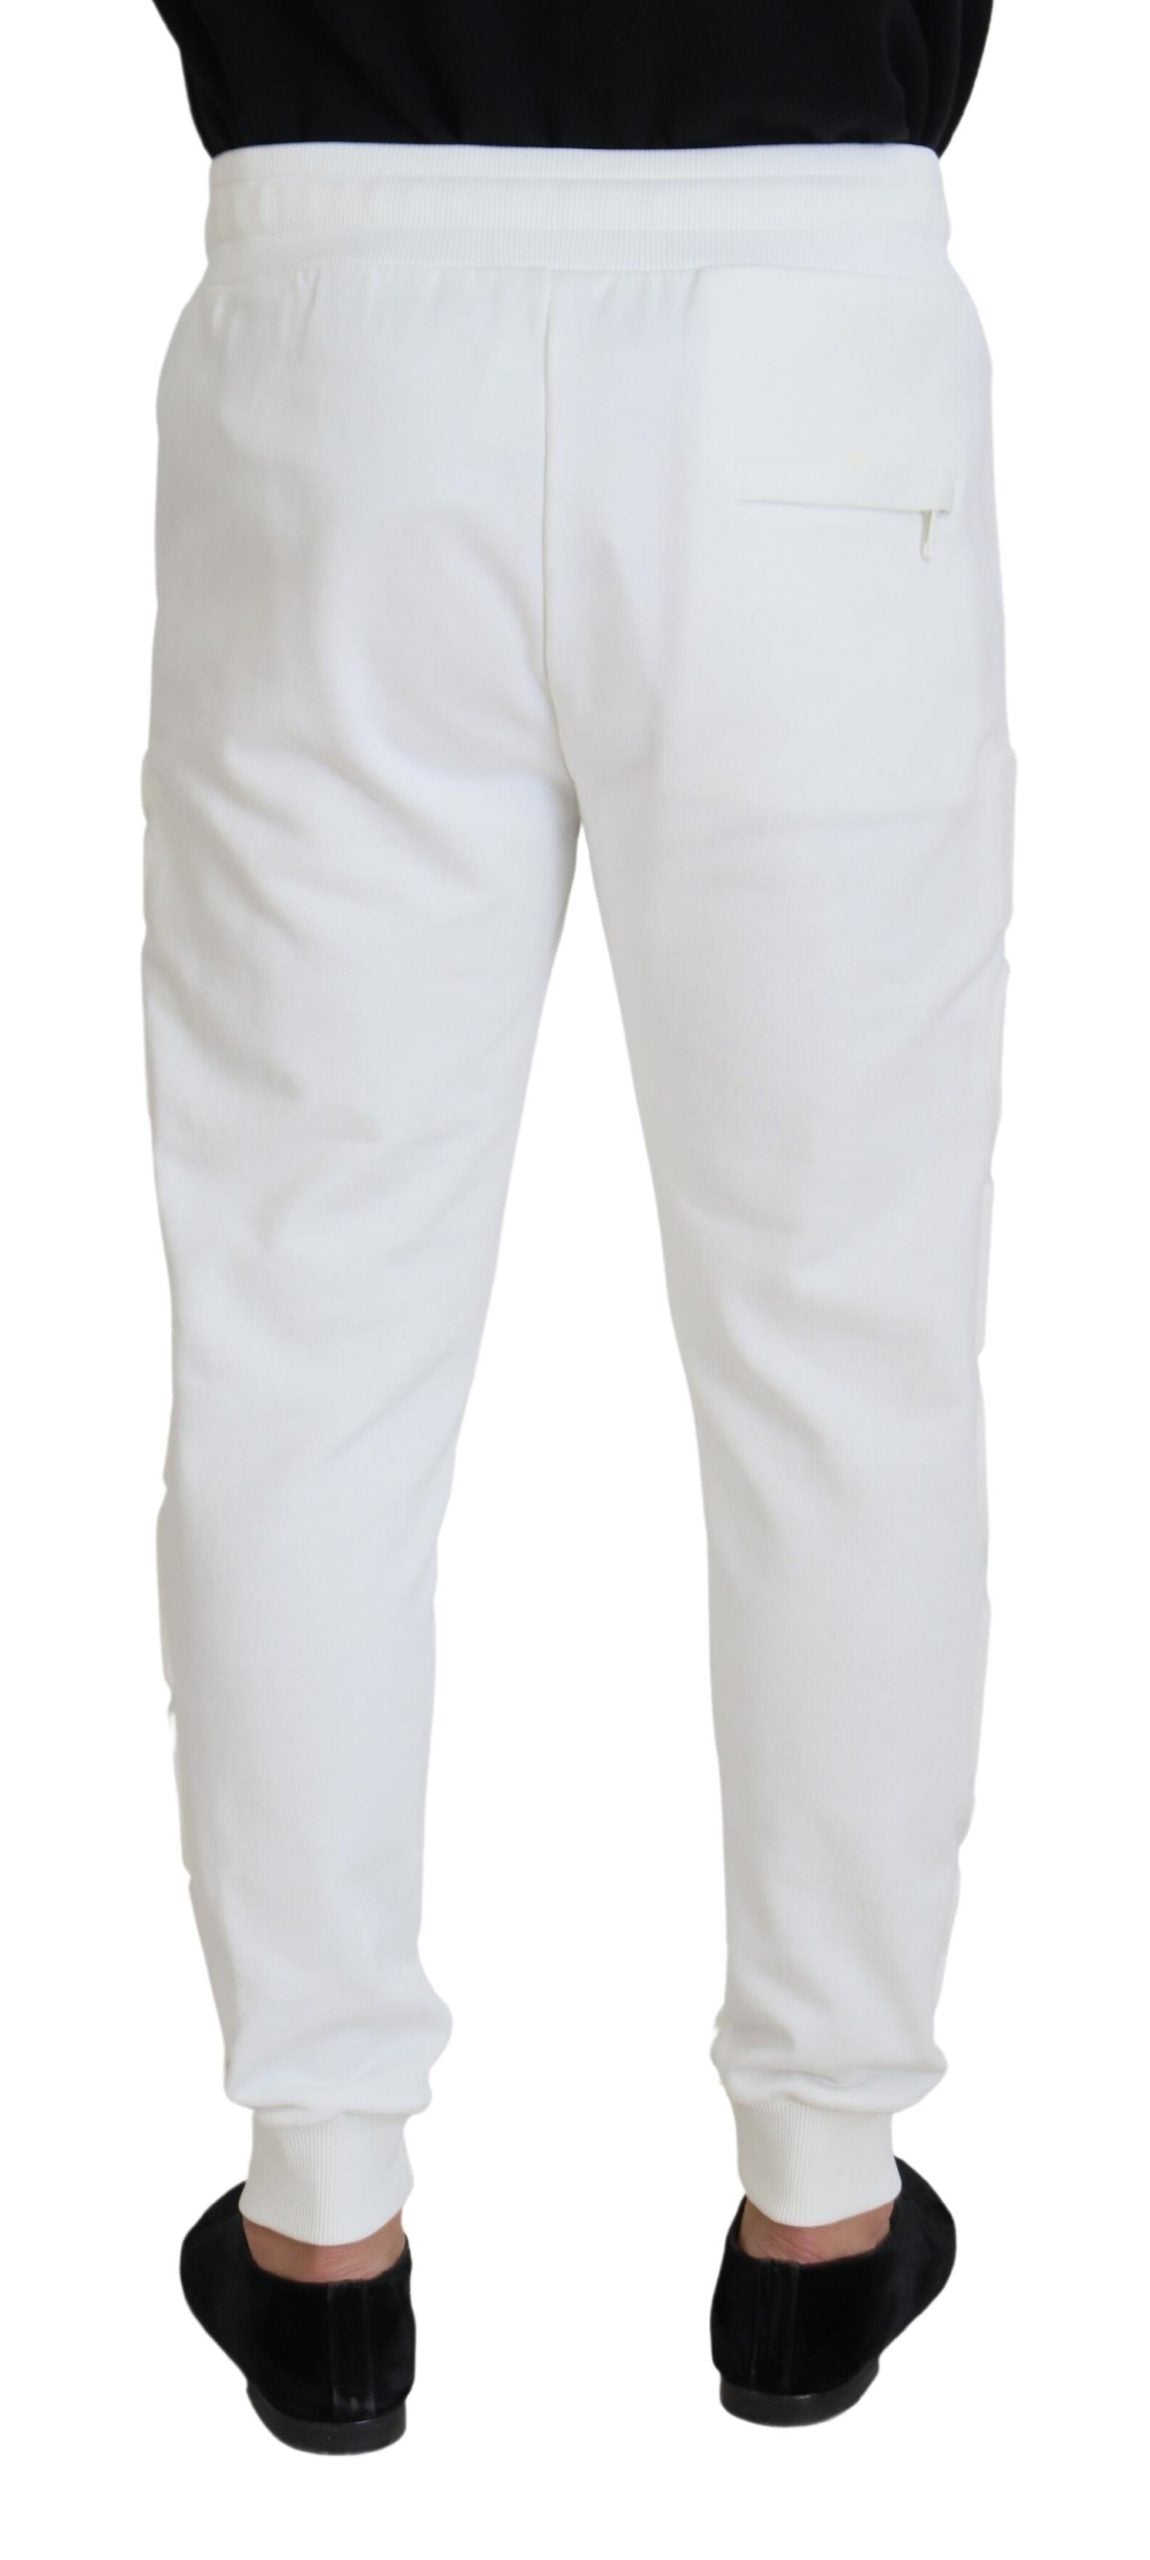 Elegant White Cotton Sweatpants